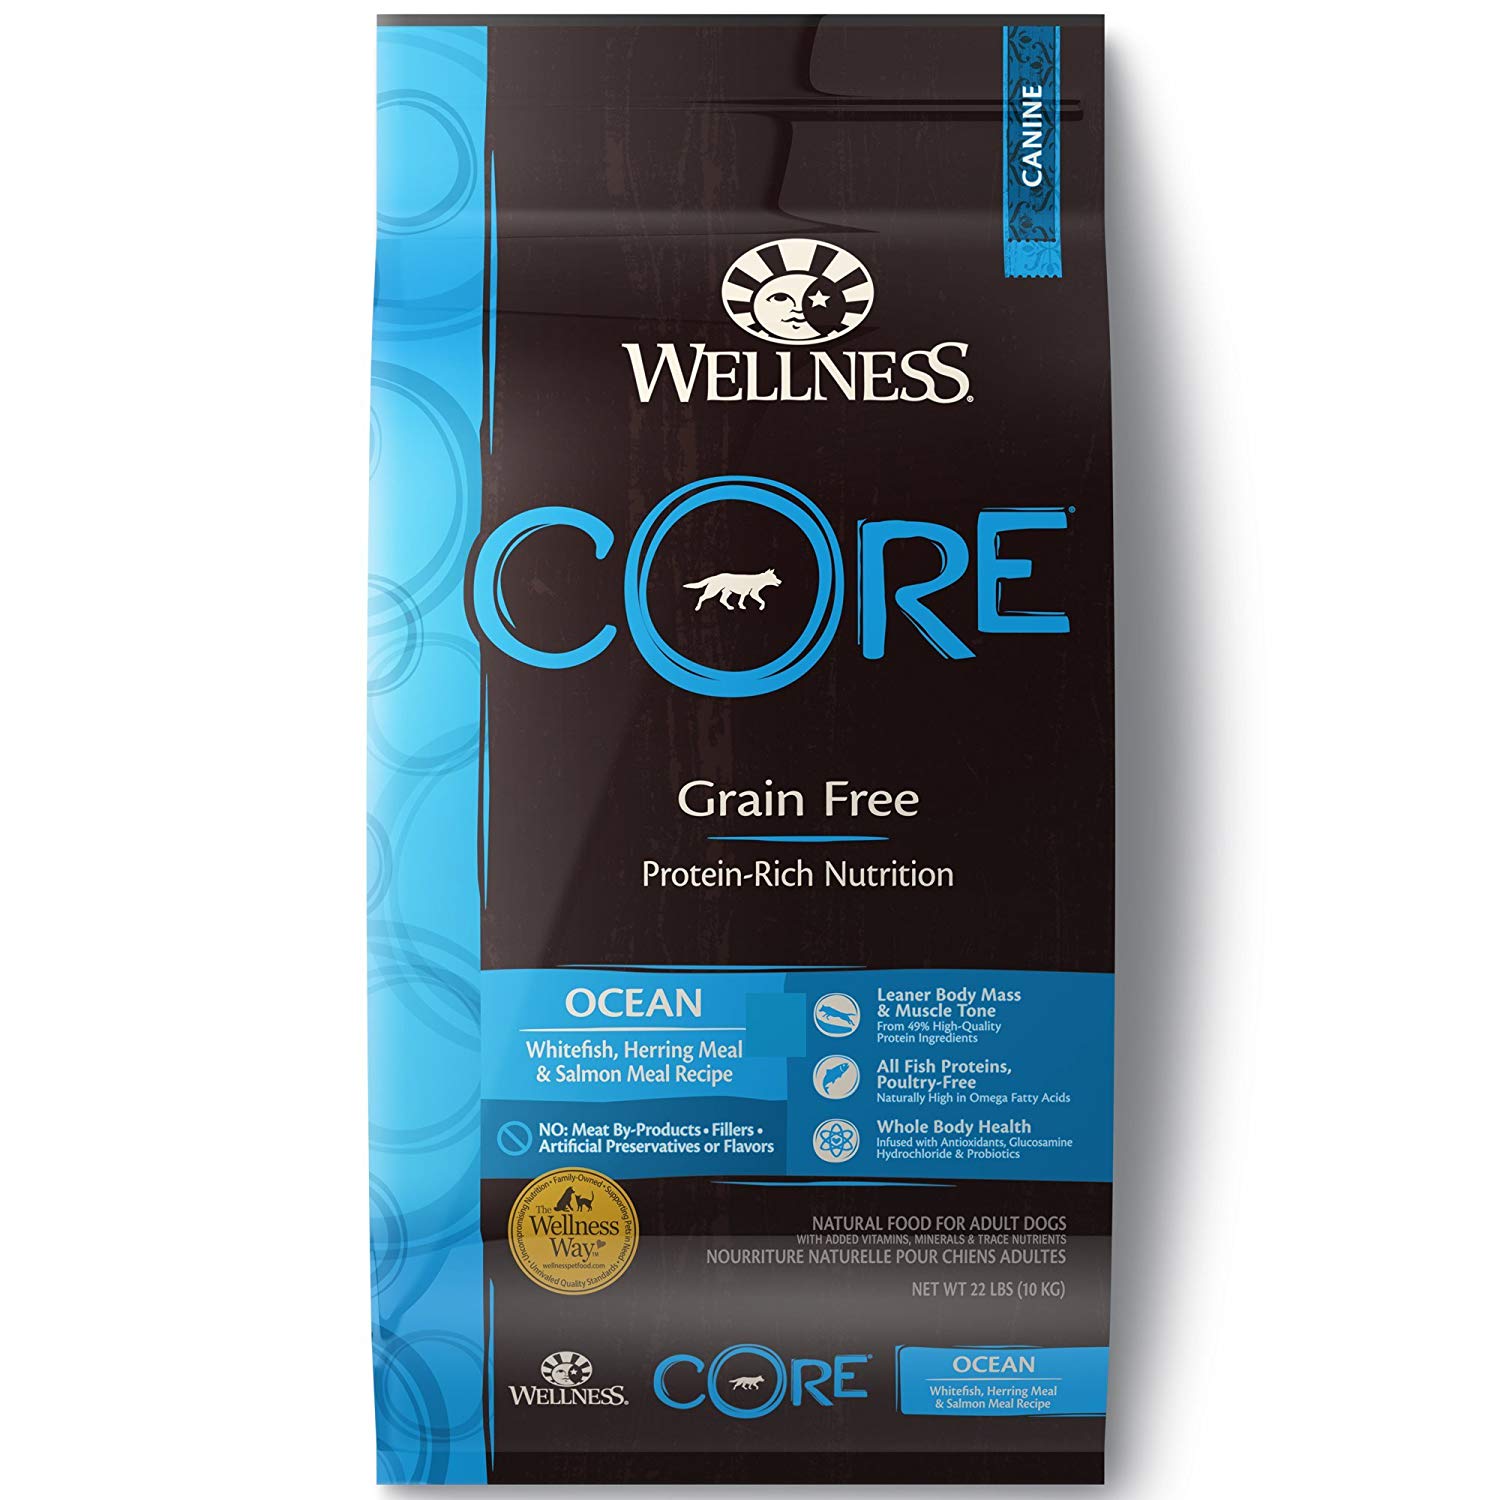 Wellness core корм для собак. Корм для щенков Wellness Core 16 кг. Корм Core Wellness для собак производитель.